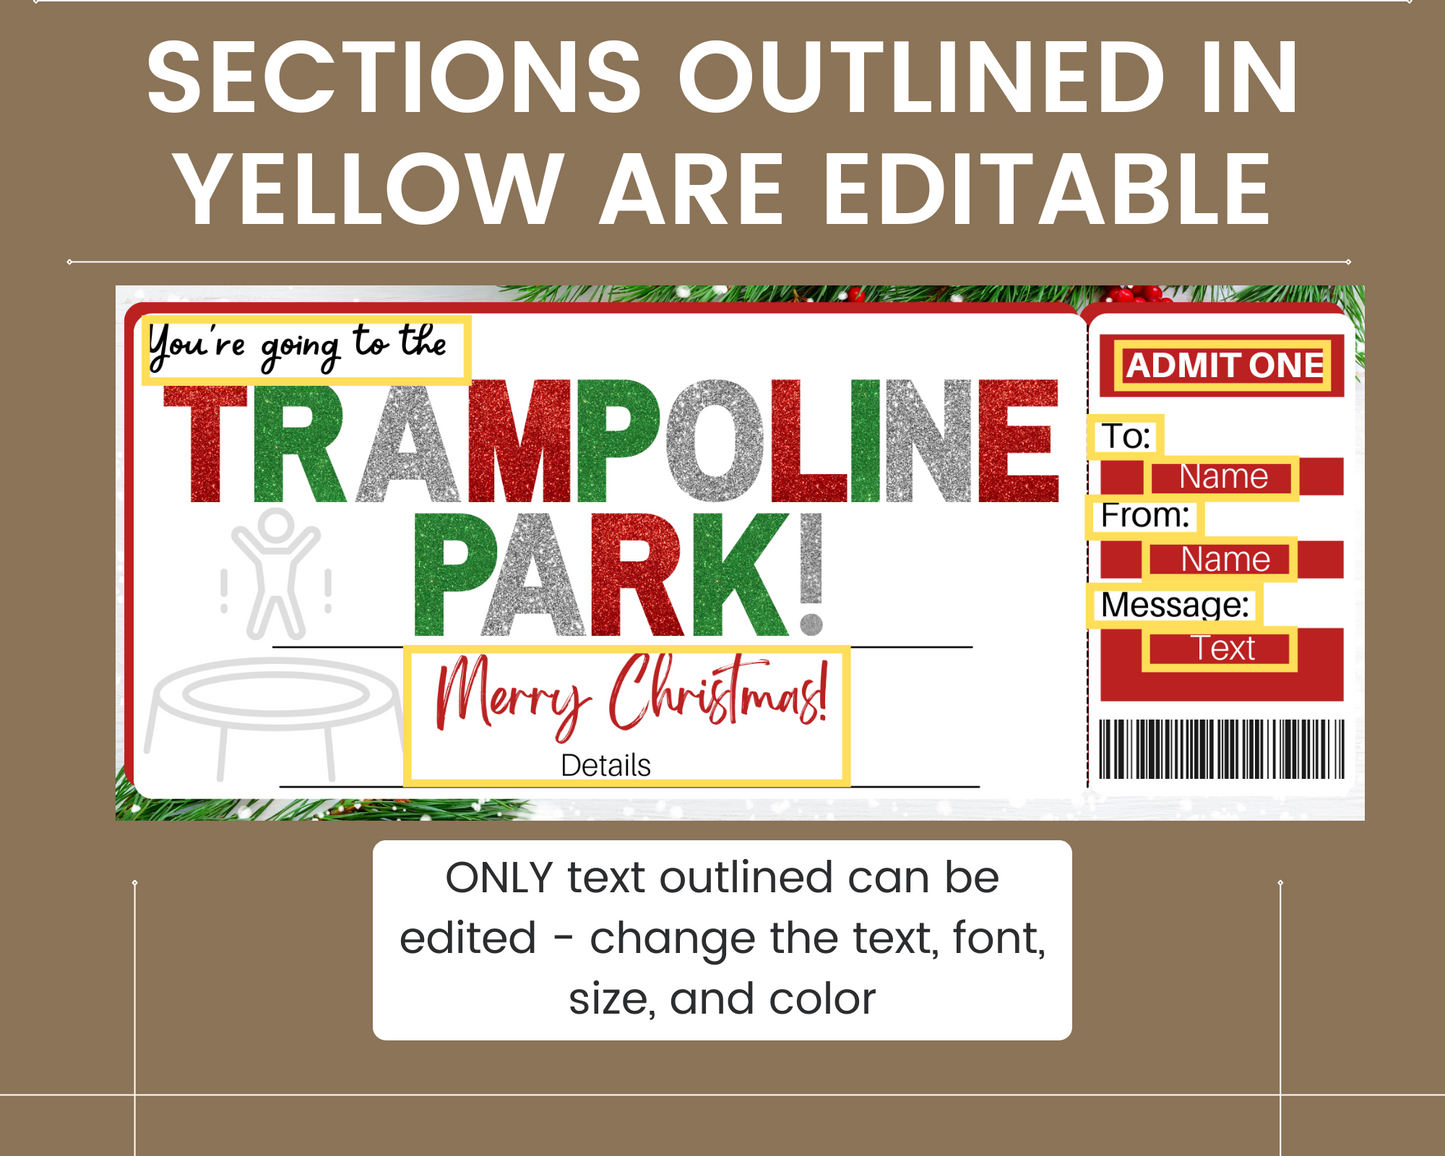 Christmas Trampoline Park Gift Ticket